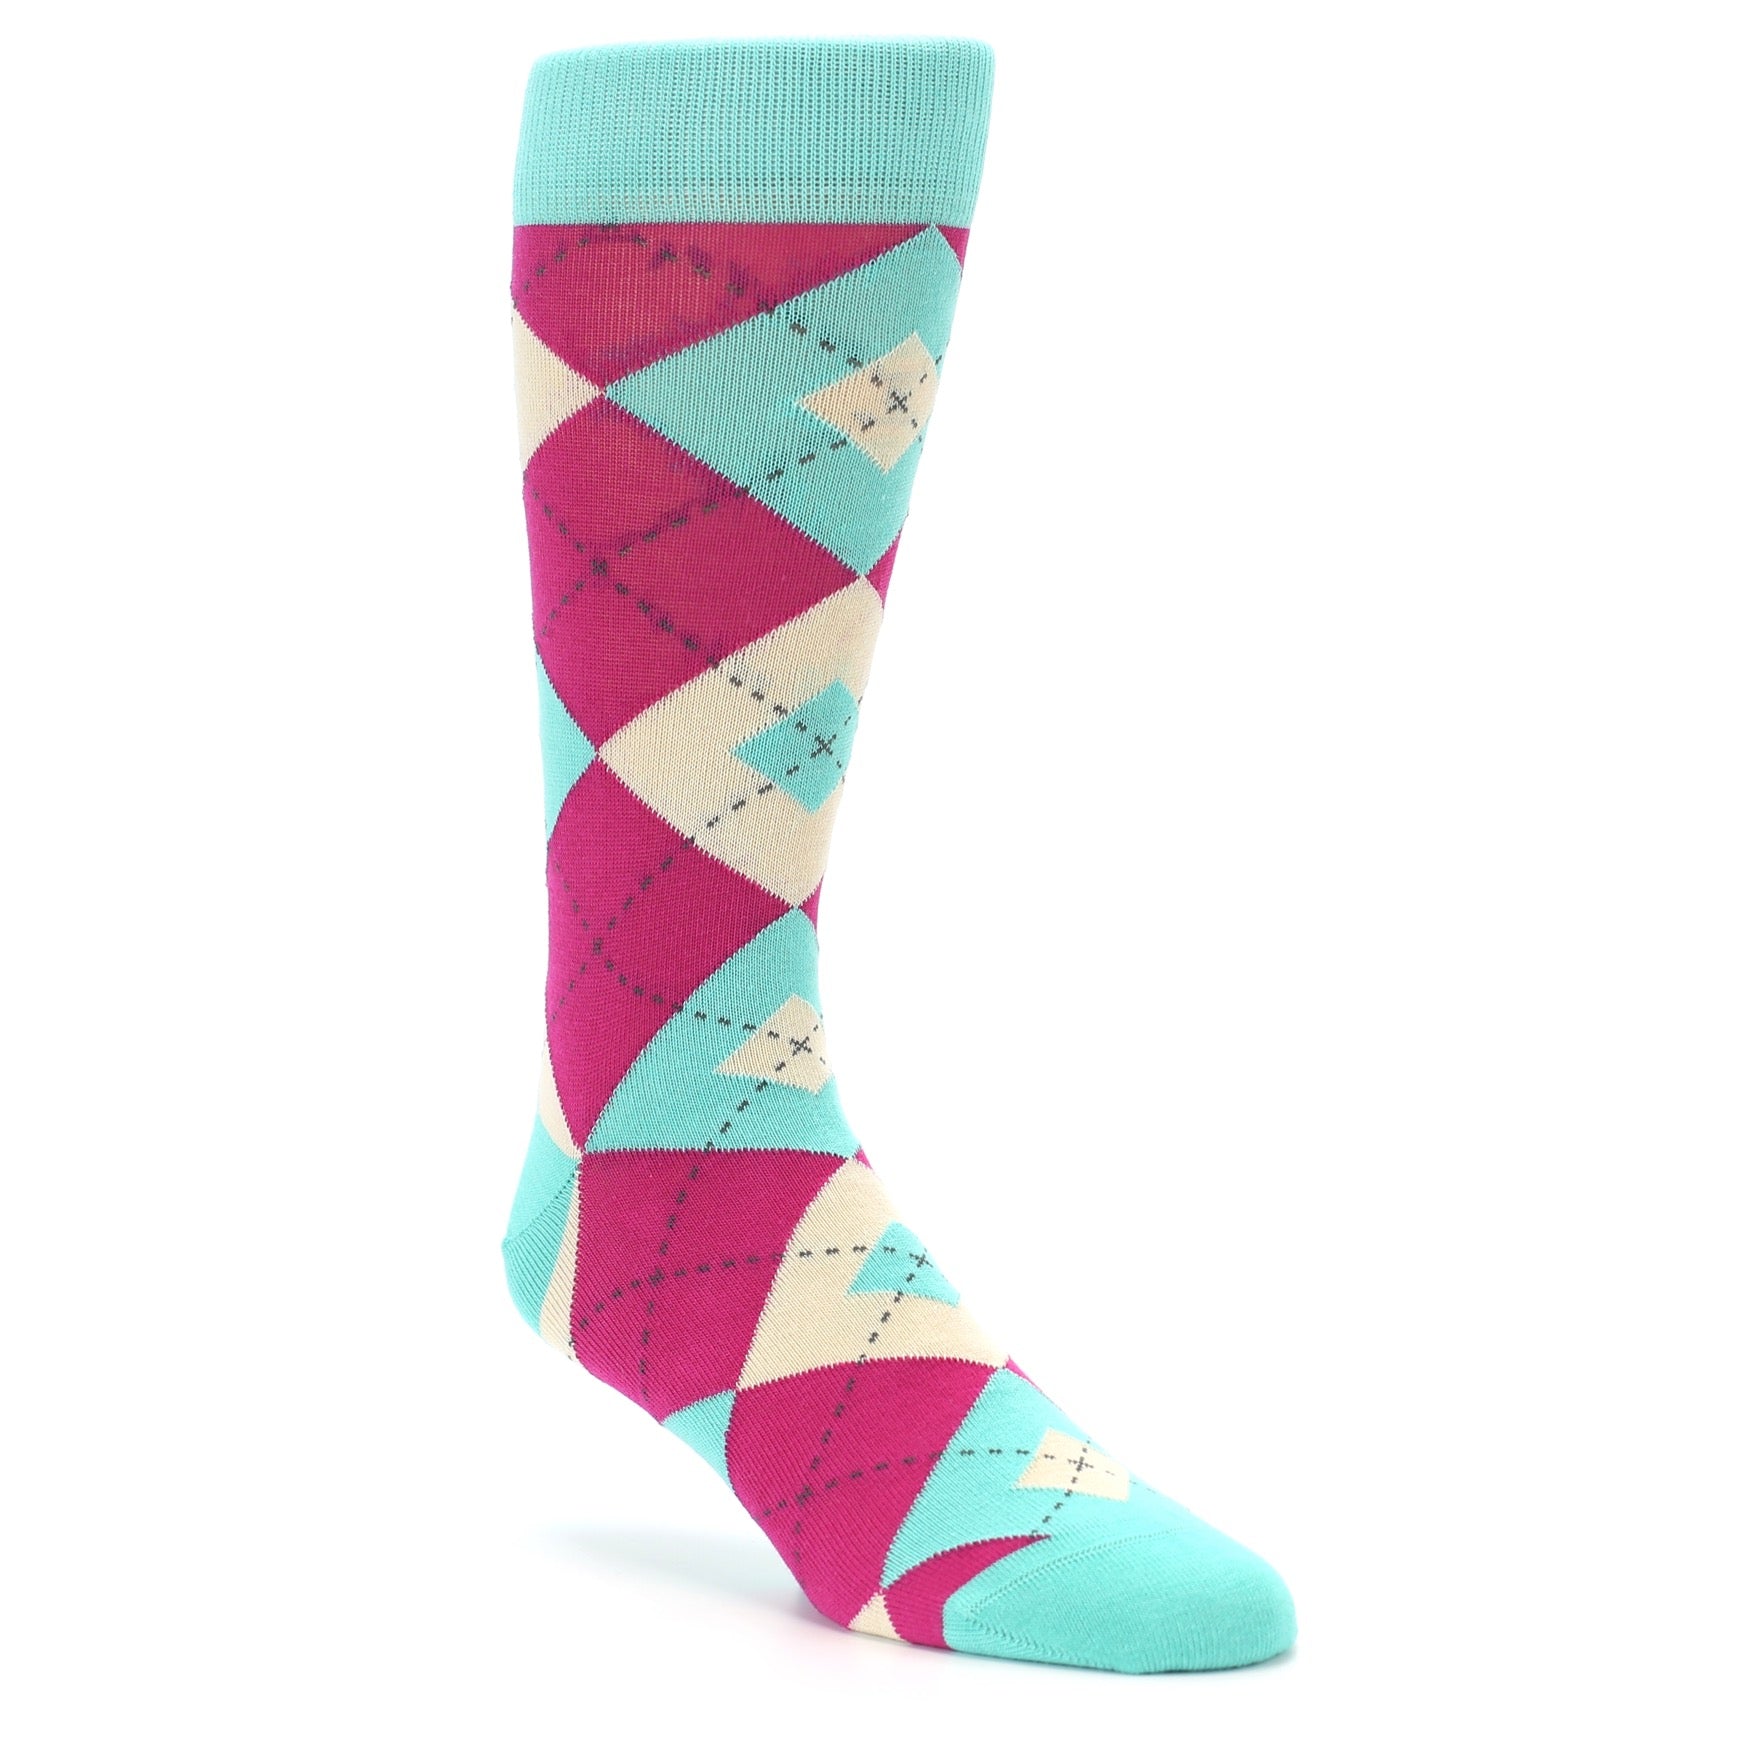 Spa Green and Fuchsia Wedding Socks in Argyle by Statement Sockwear